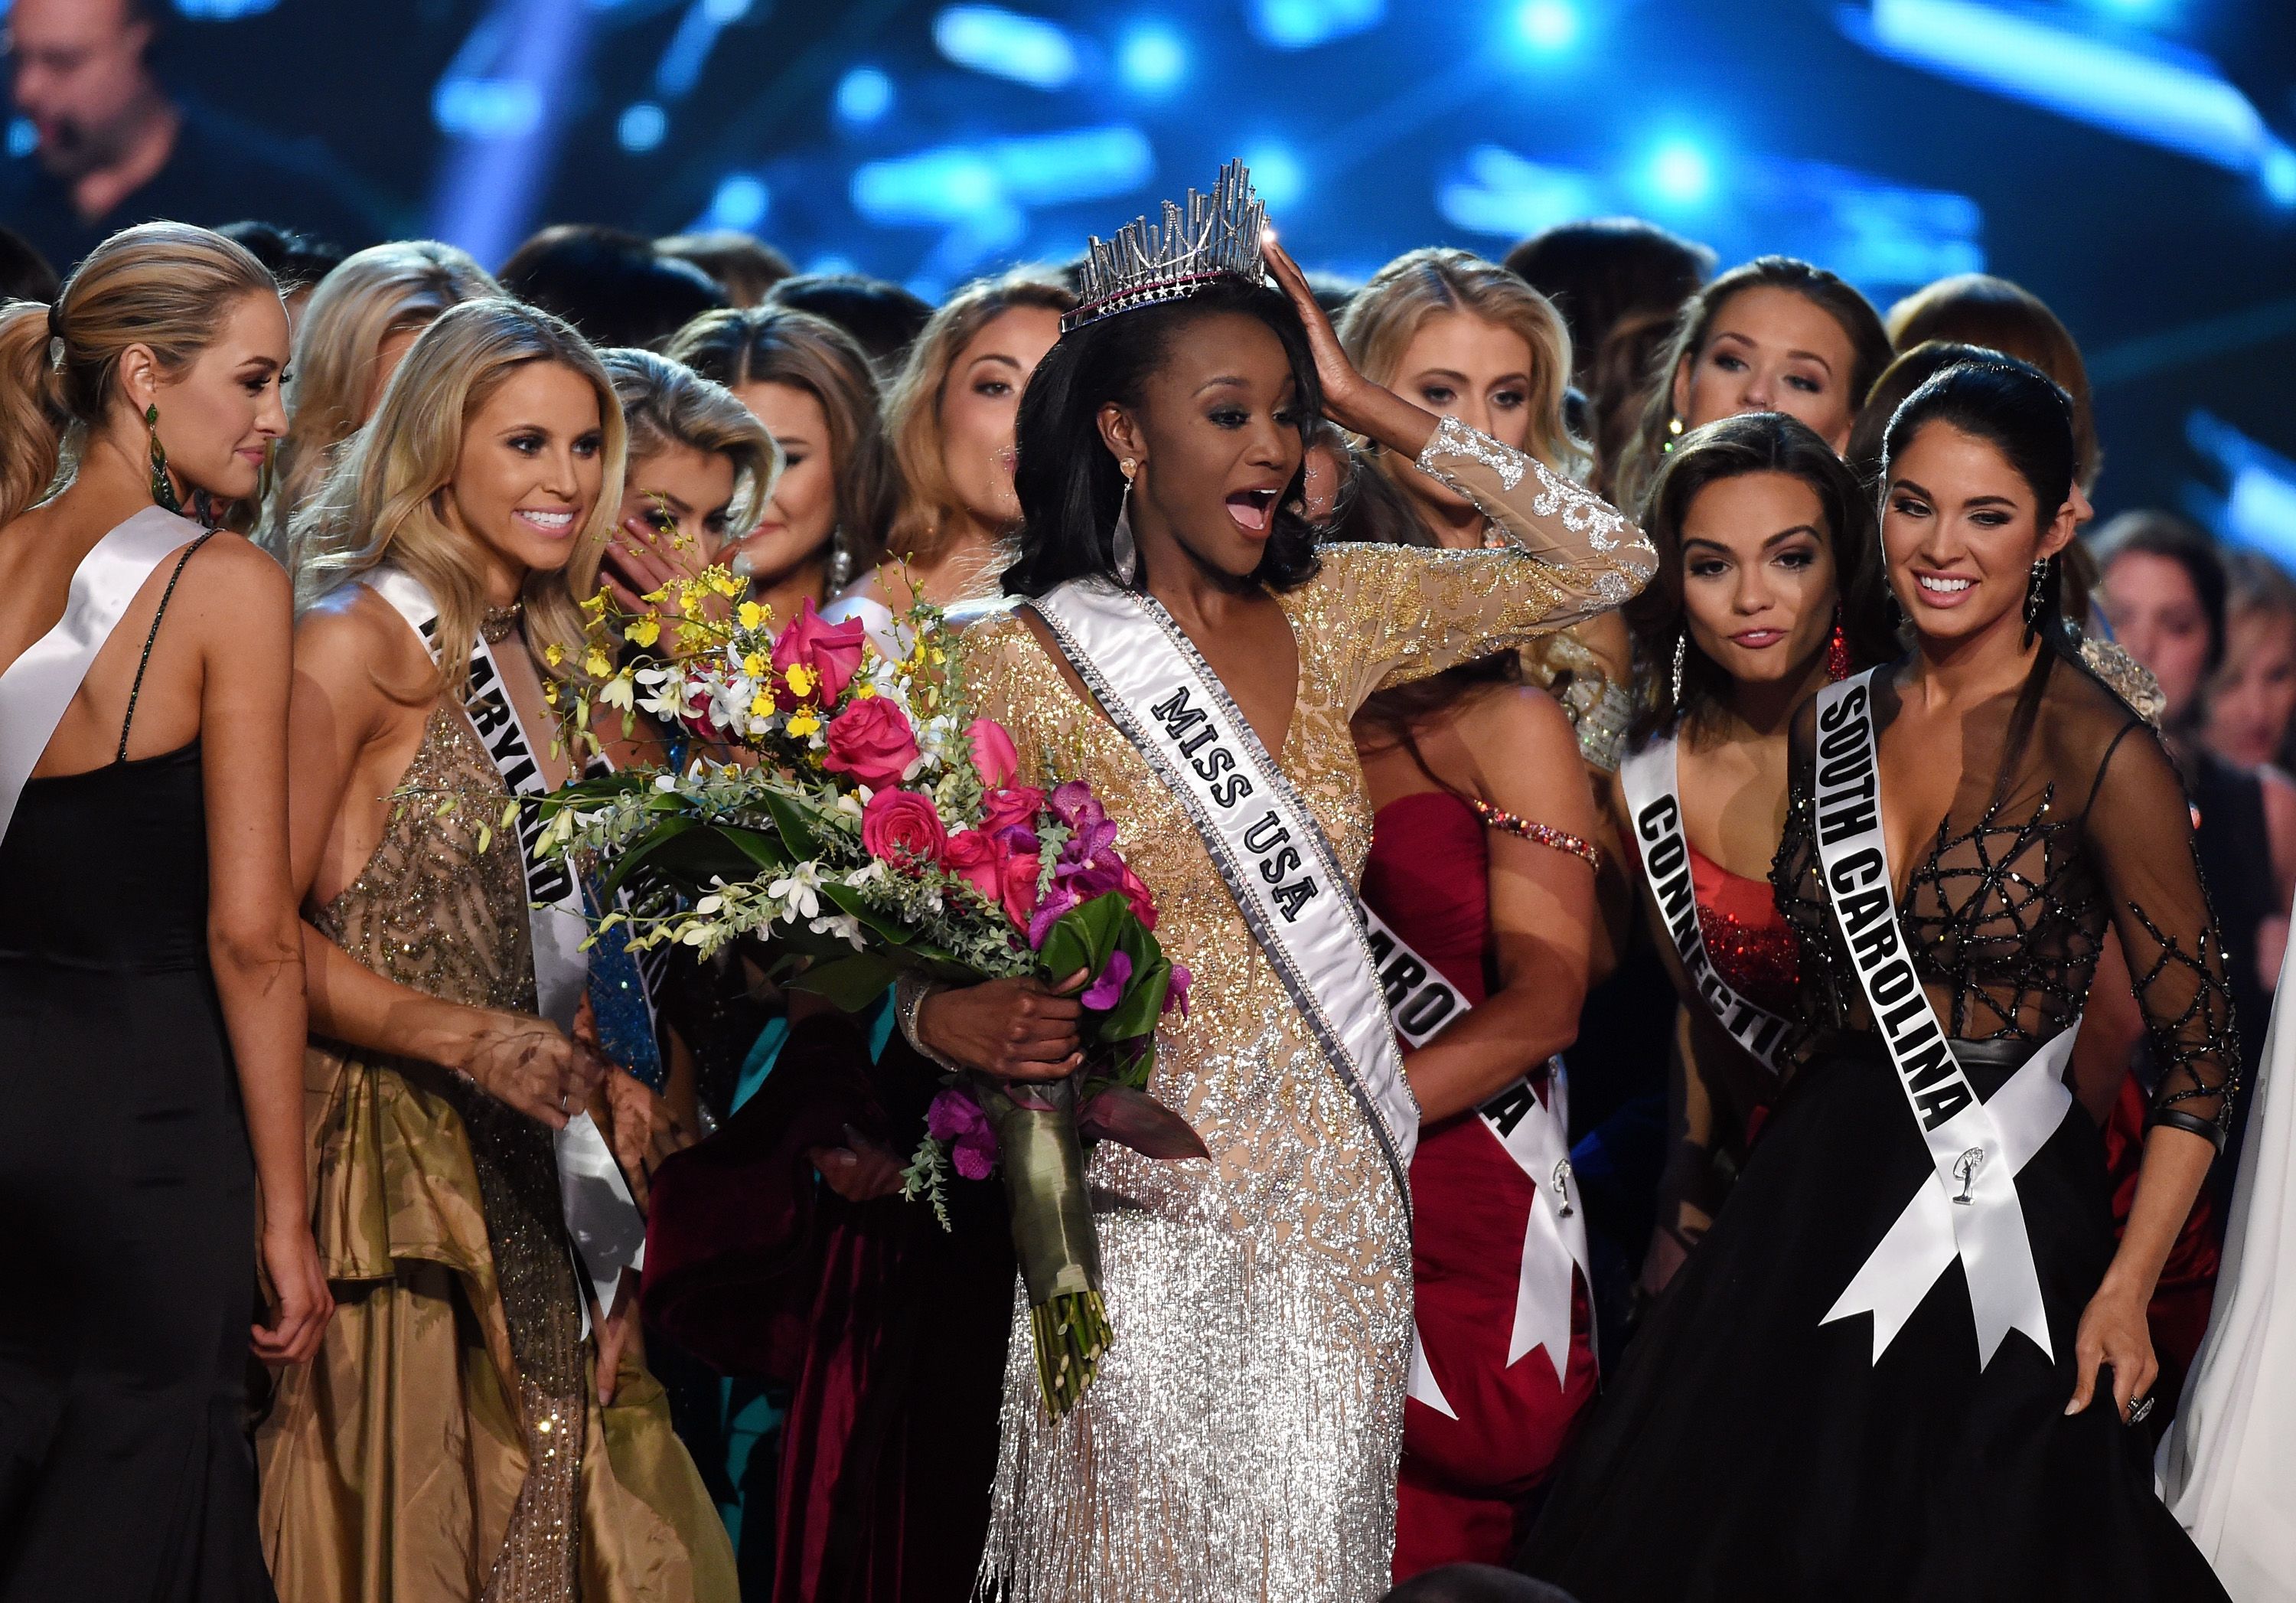 Black Junior Nudist Pageants - Deshauna Barber crowned Miss USA 2016 | CNN